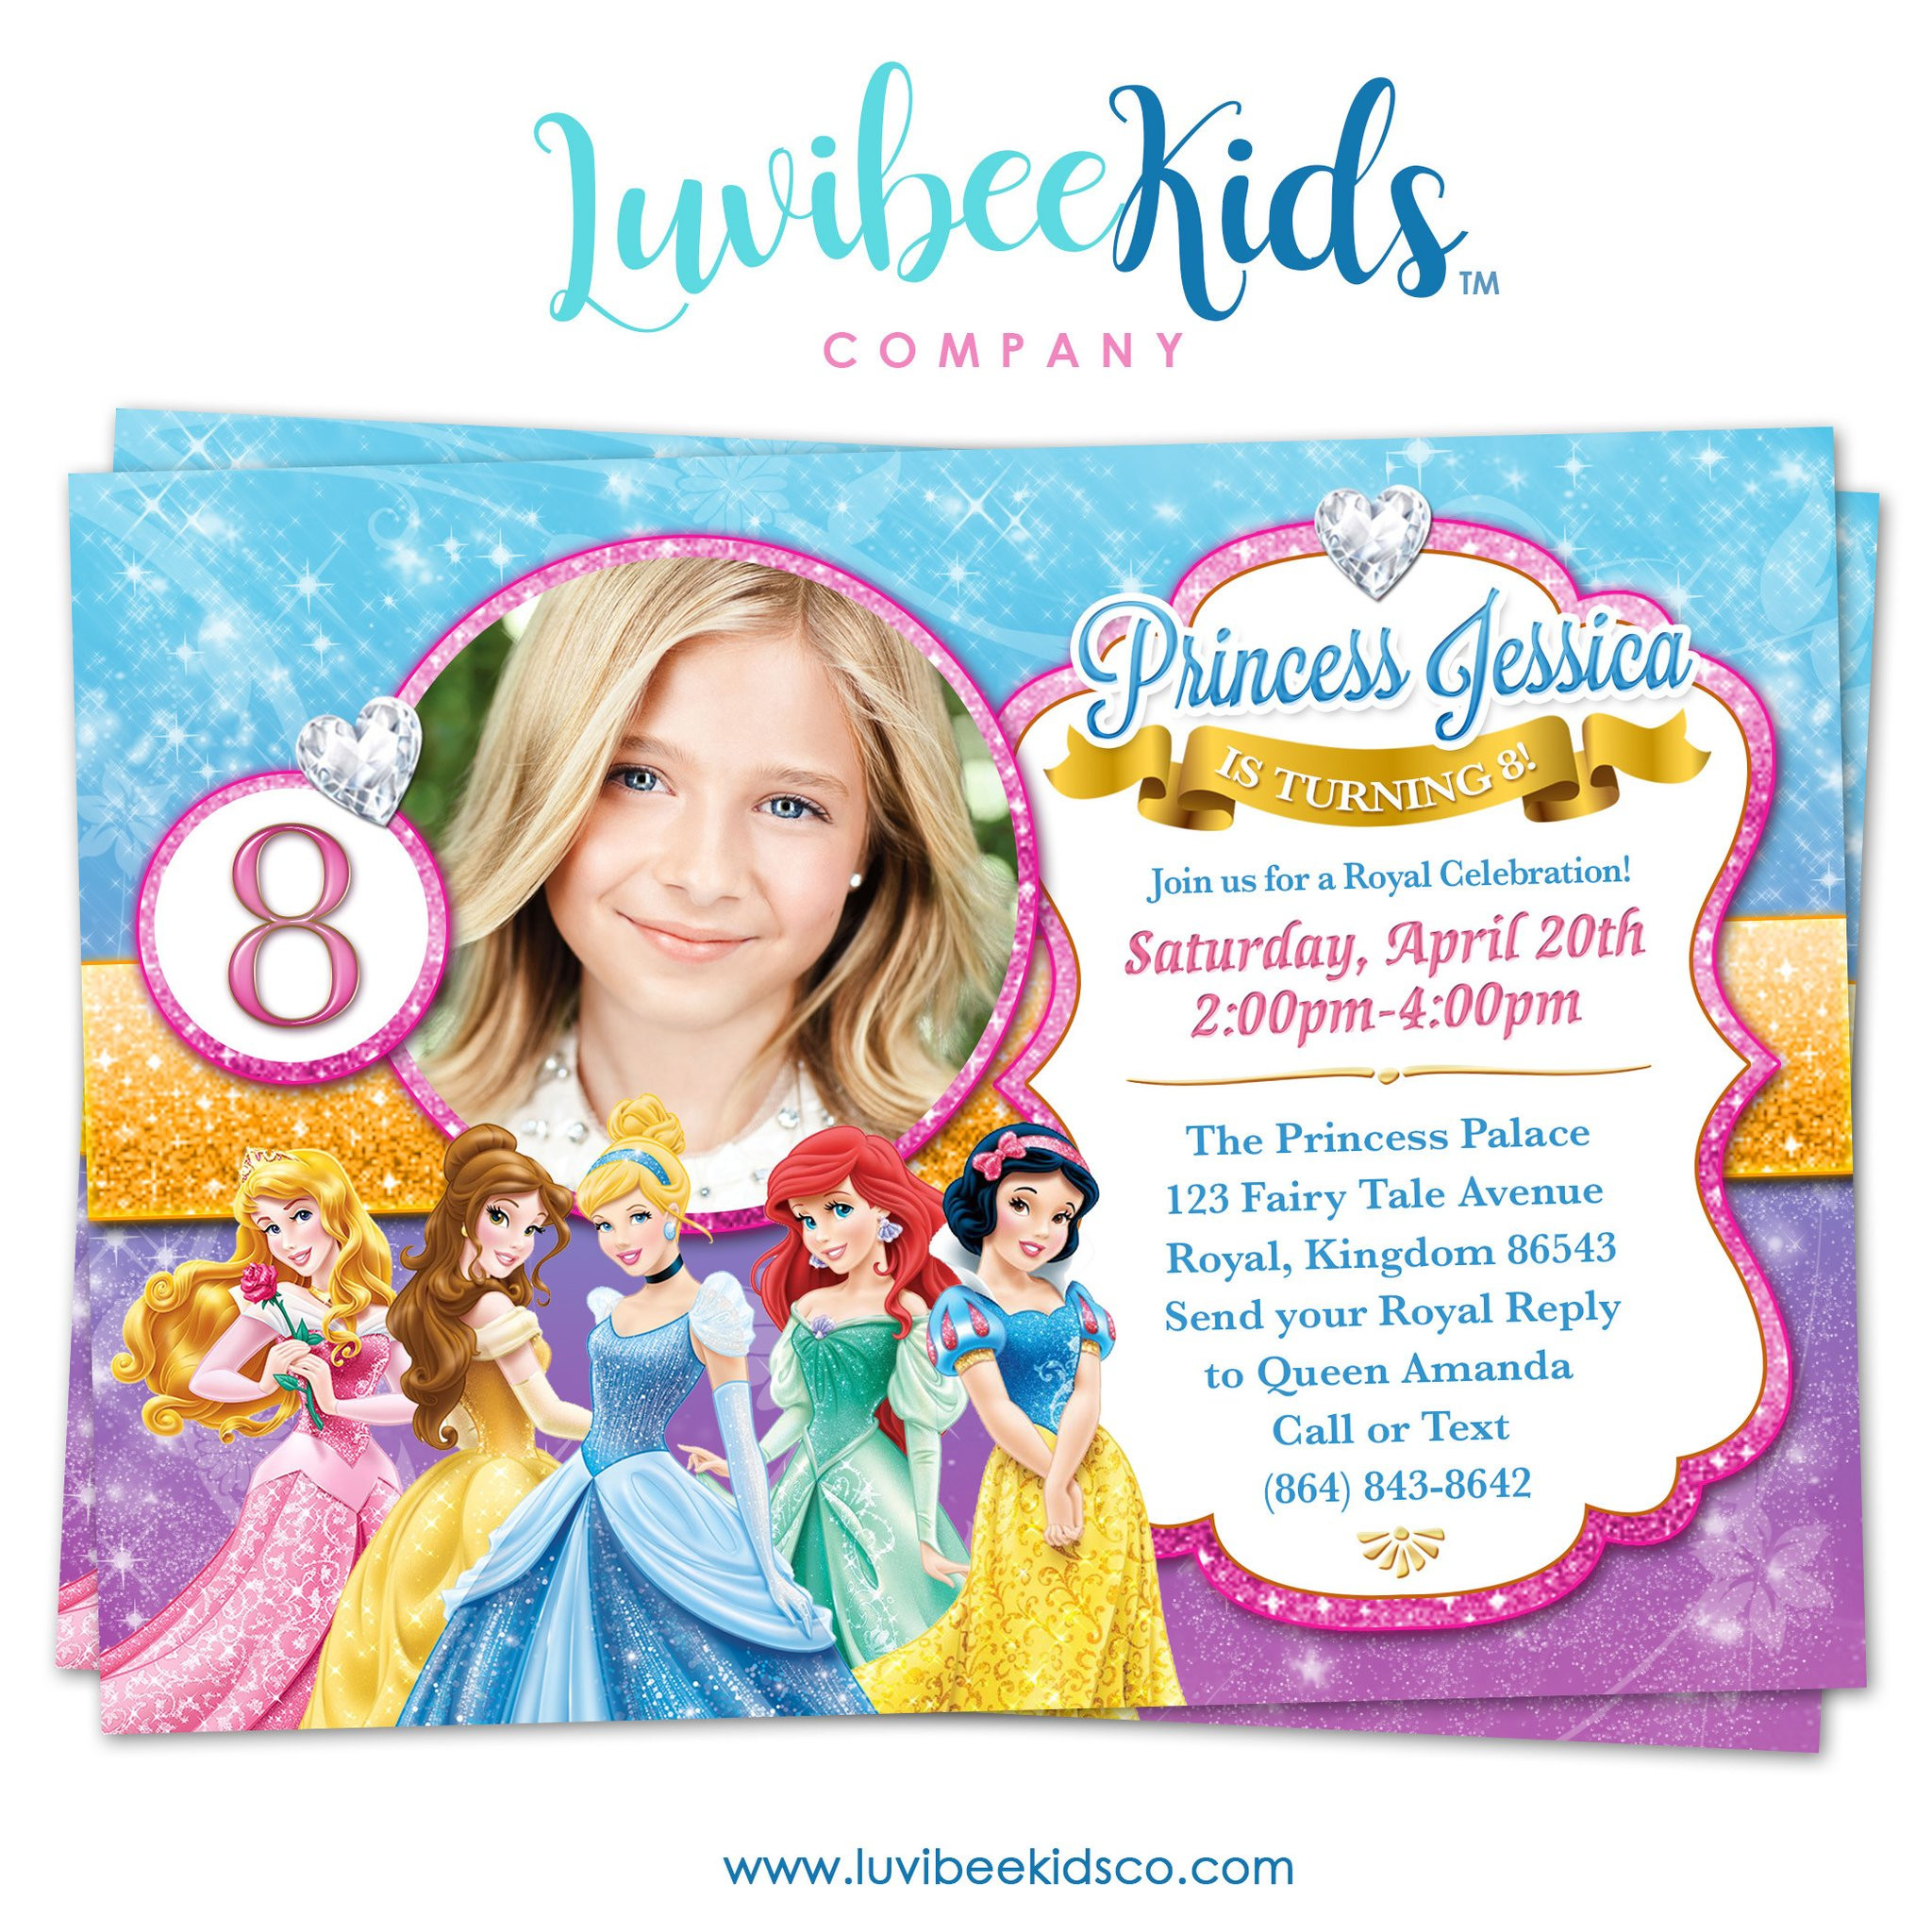 Disney Princess Birthday Party Invitations
 Disney Princesses Birthday Invitation with